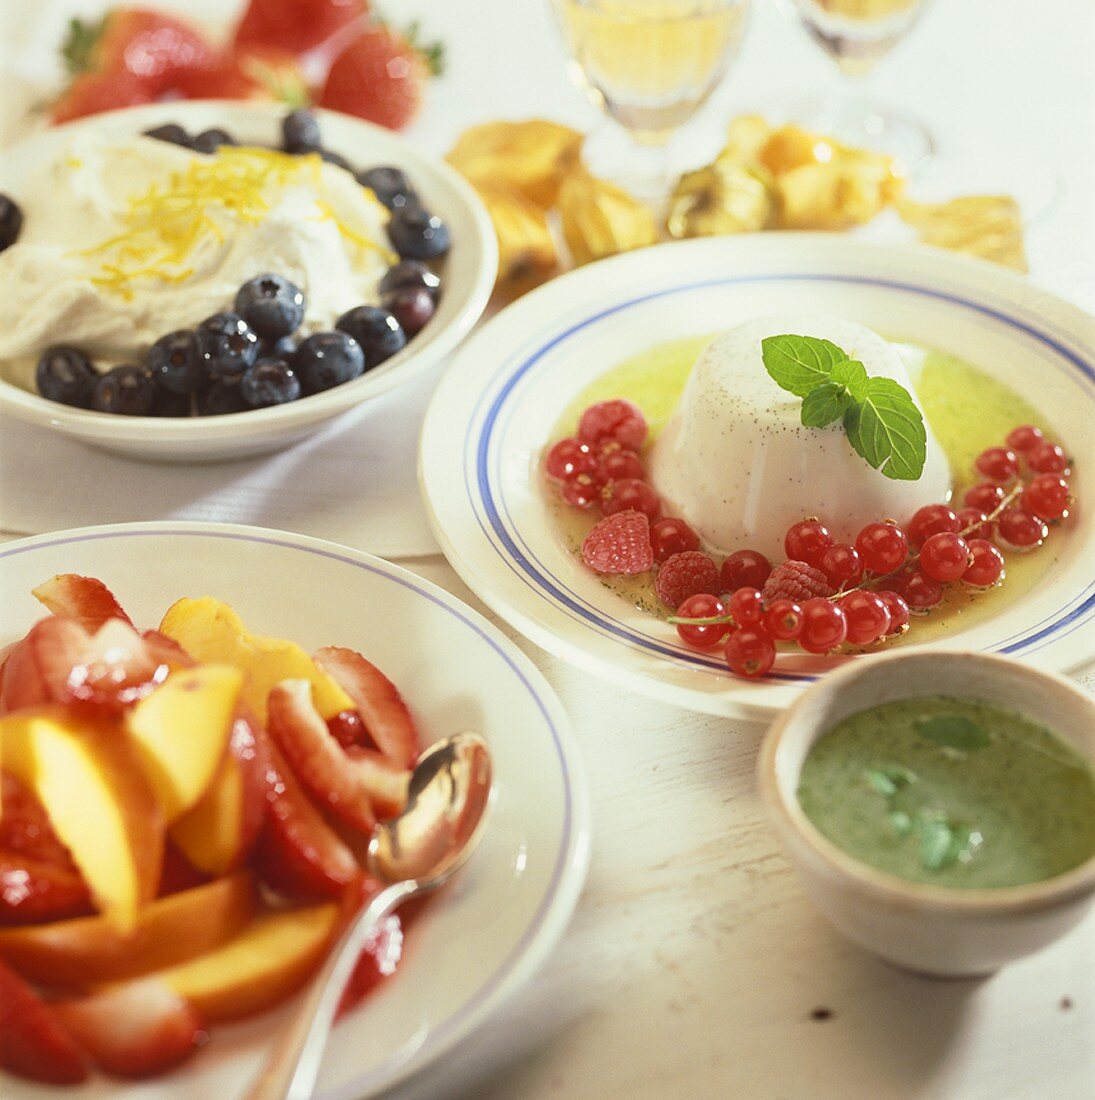 Fruit salad, panna cotta and blueberries with lemon cream